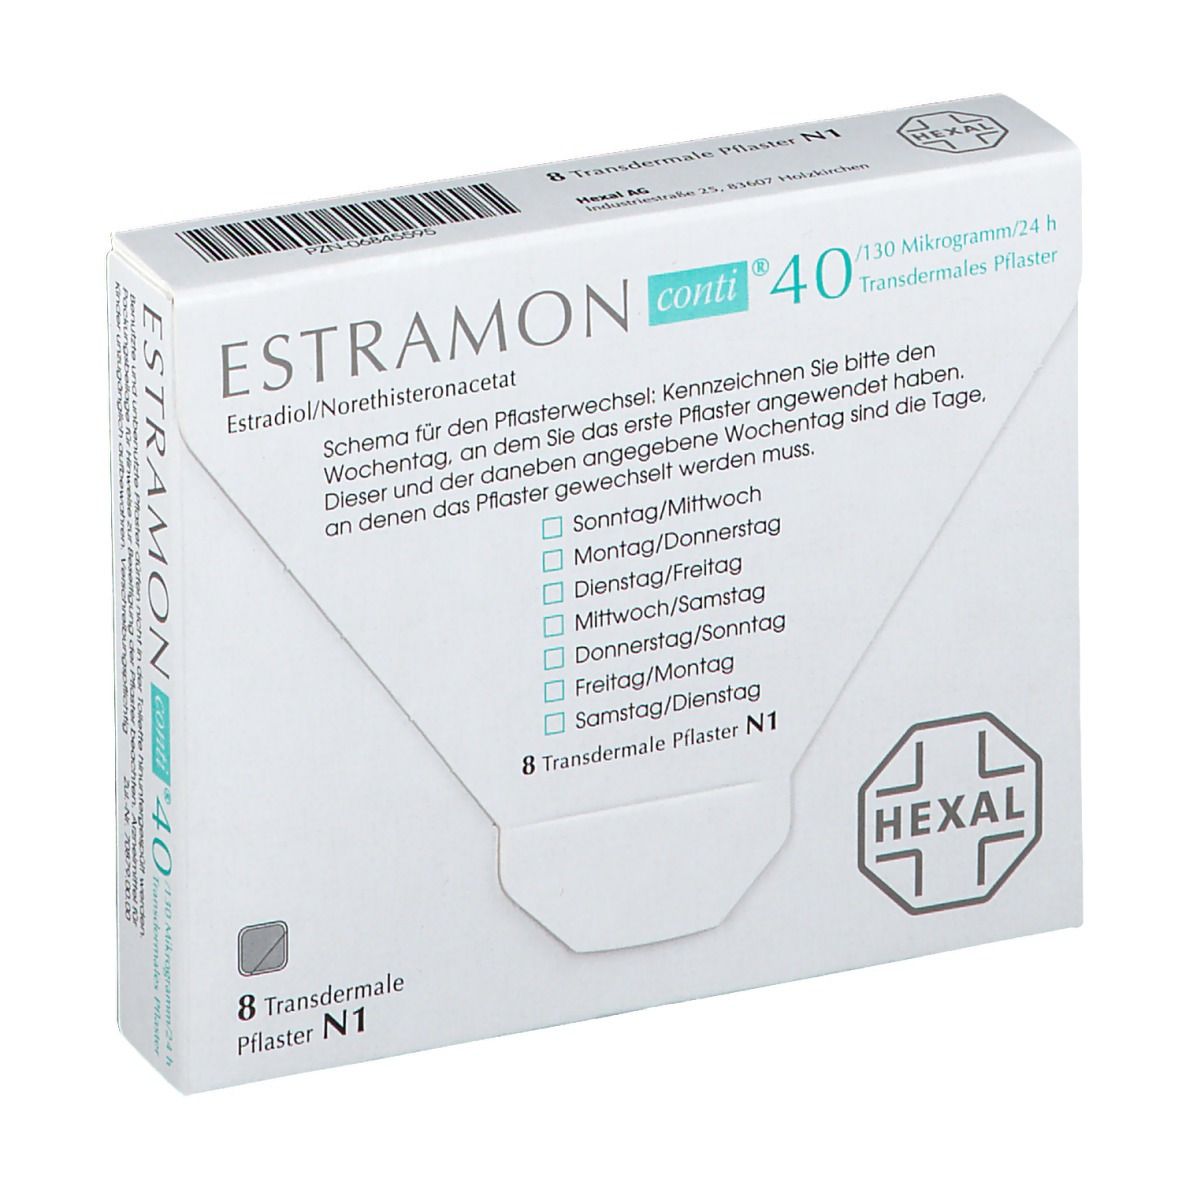 ESTRAMON conti® 40/130 µg/24 Stunden